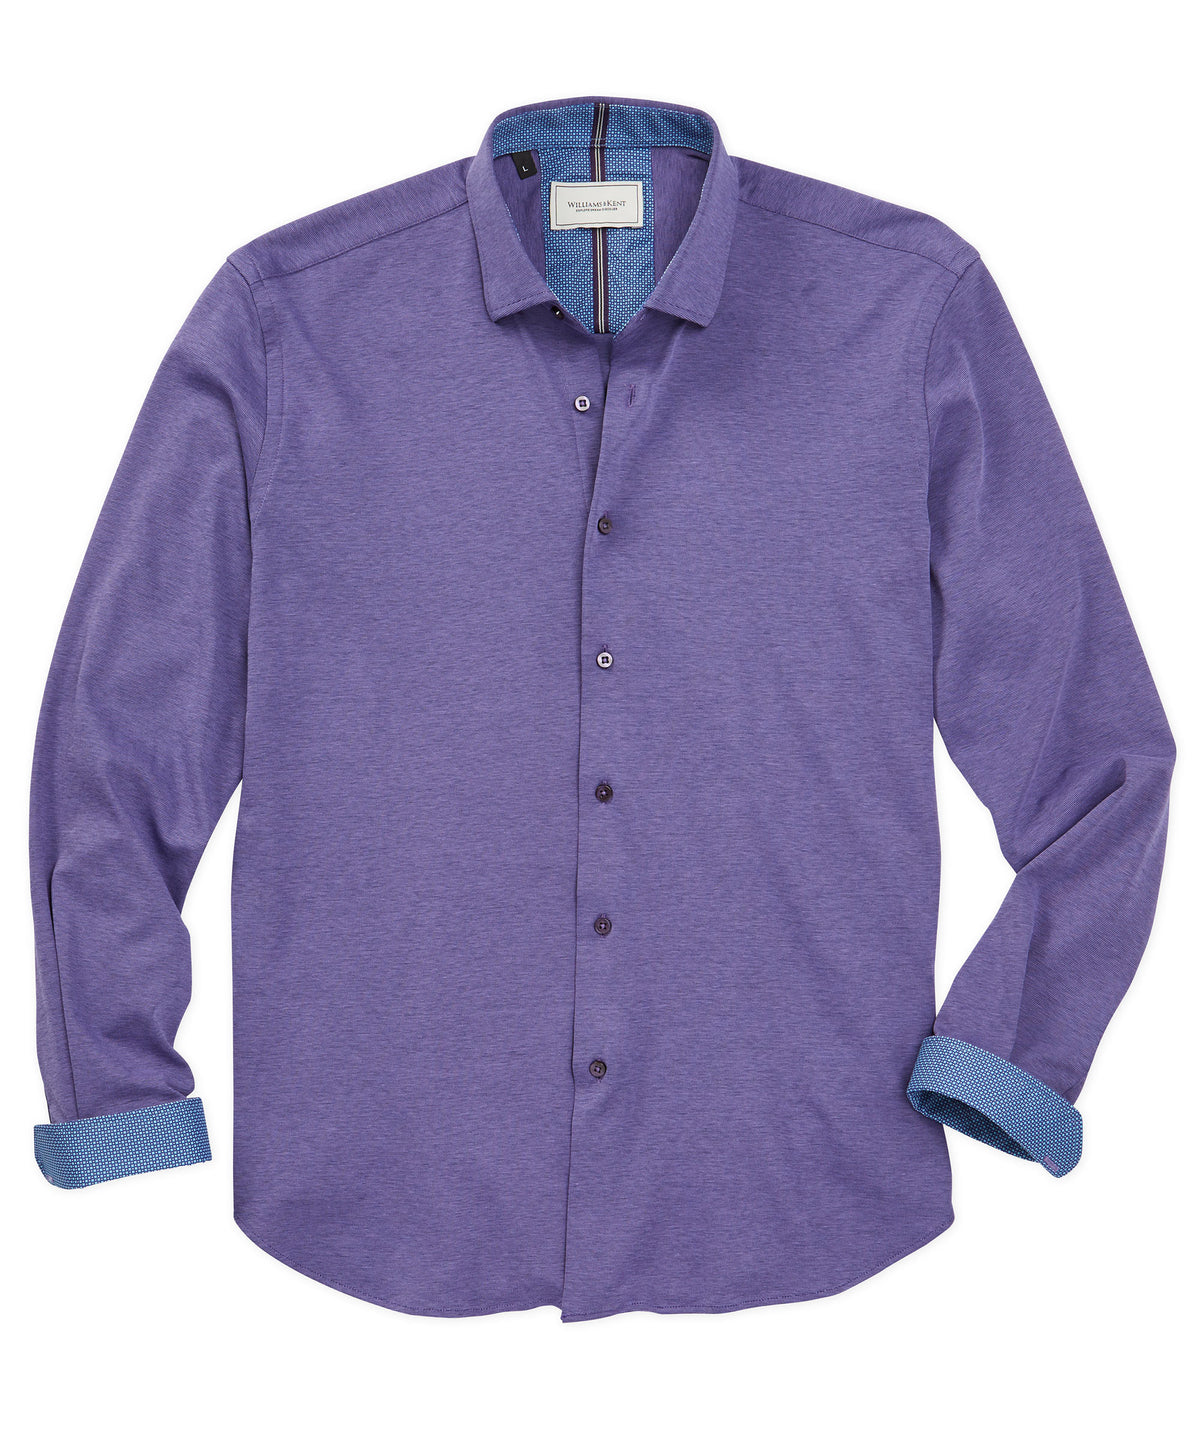 Mercerized Pima Cotton Textured Knit Long Sleeve Sport Shirt